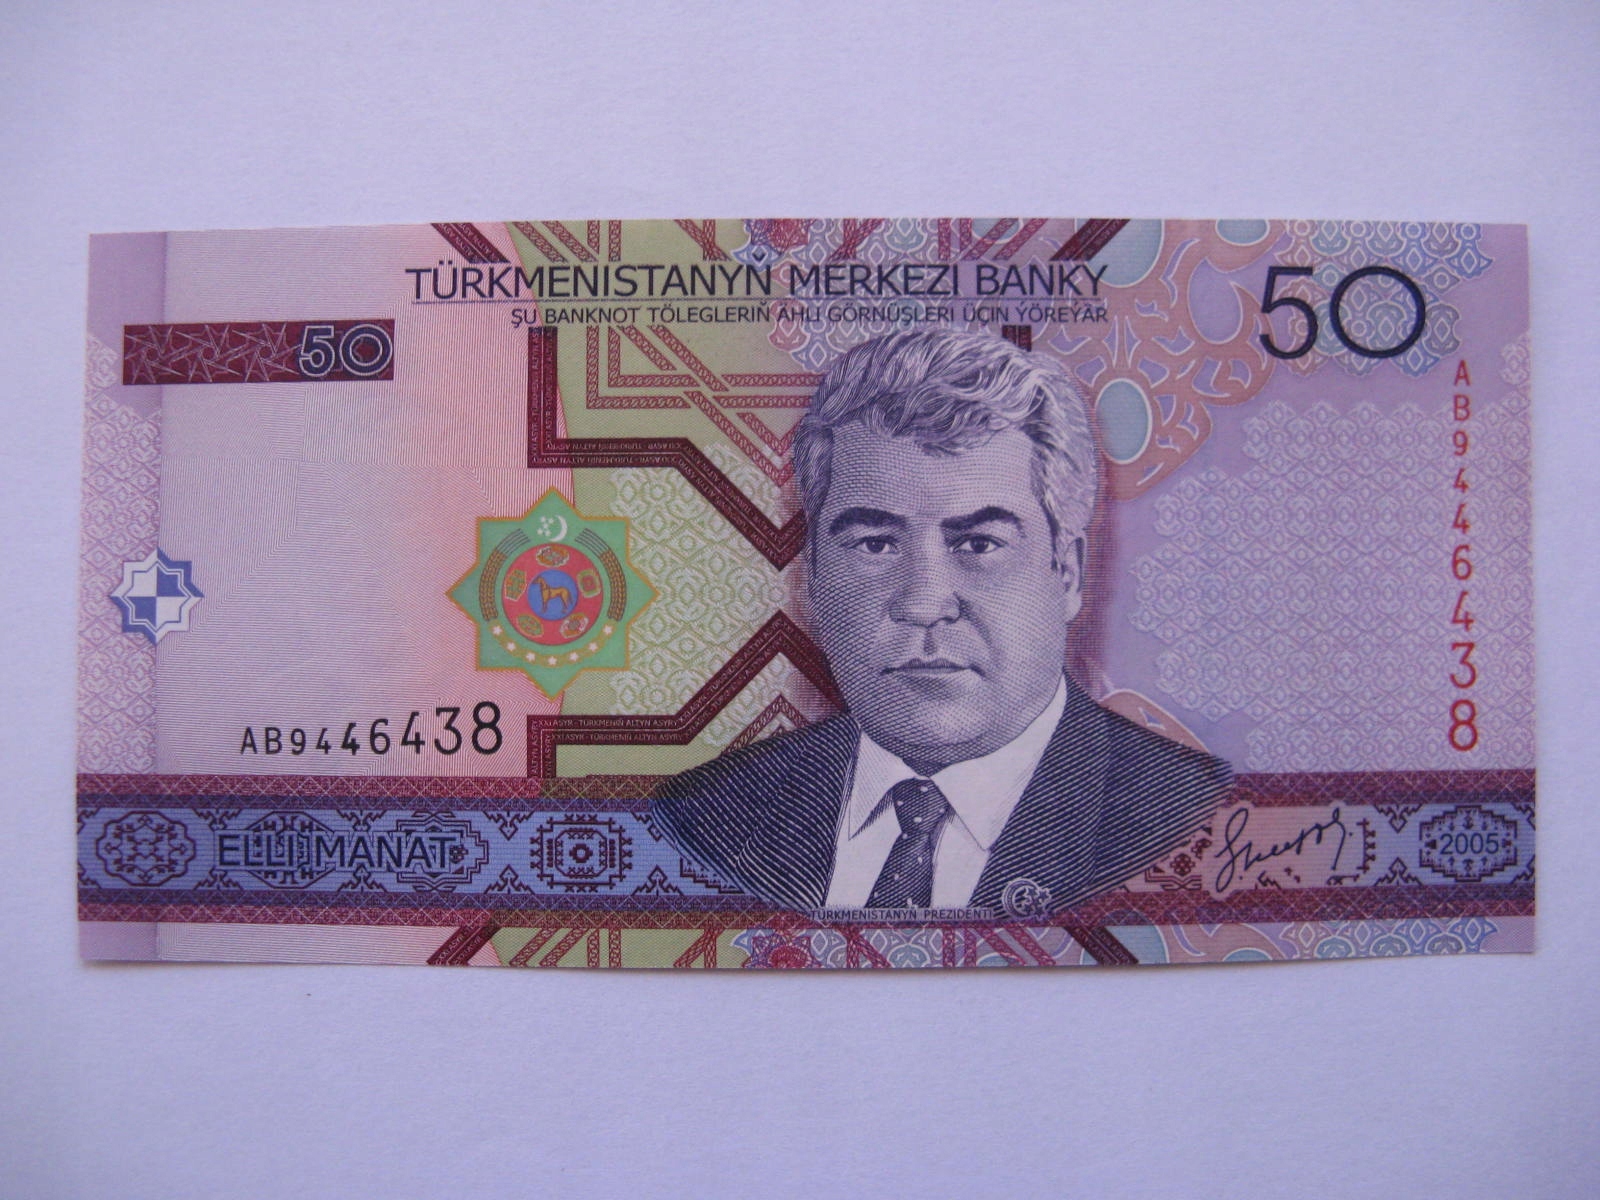 Манат руби. 100 Манат Туркменистан. Купюра Туркменистана манат. Деньги Туркмении 100 манат. Туркменский манат купюры.